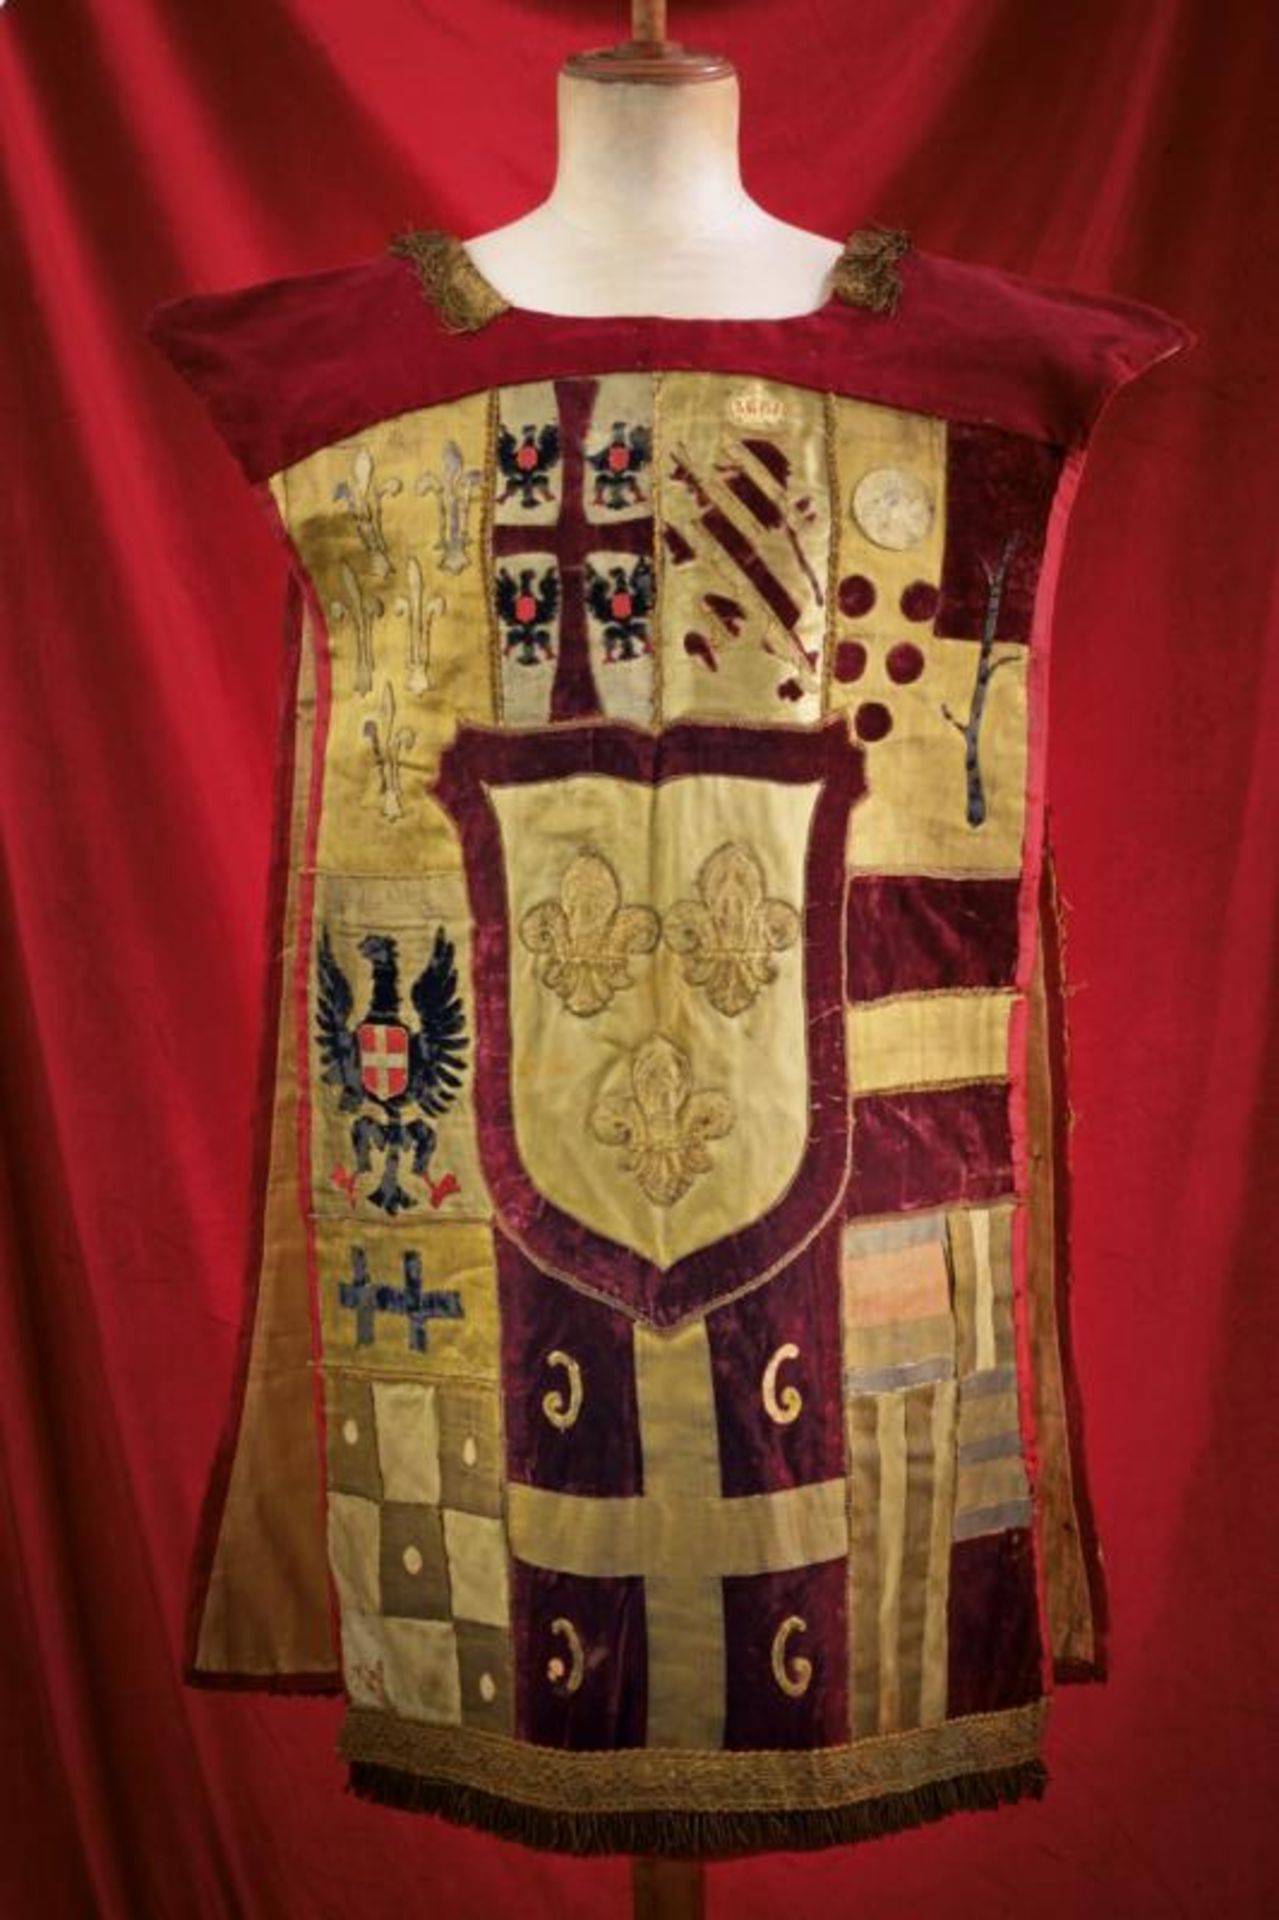 A herald's mantel